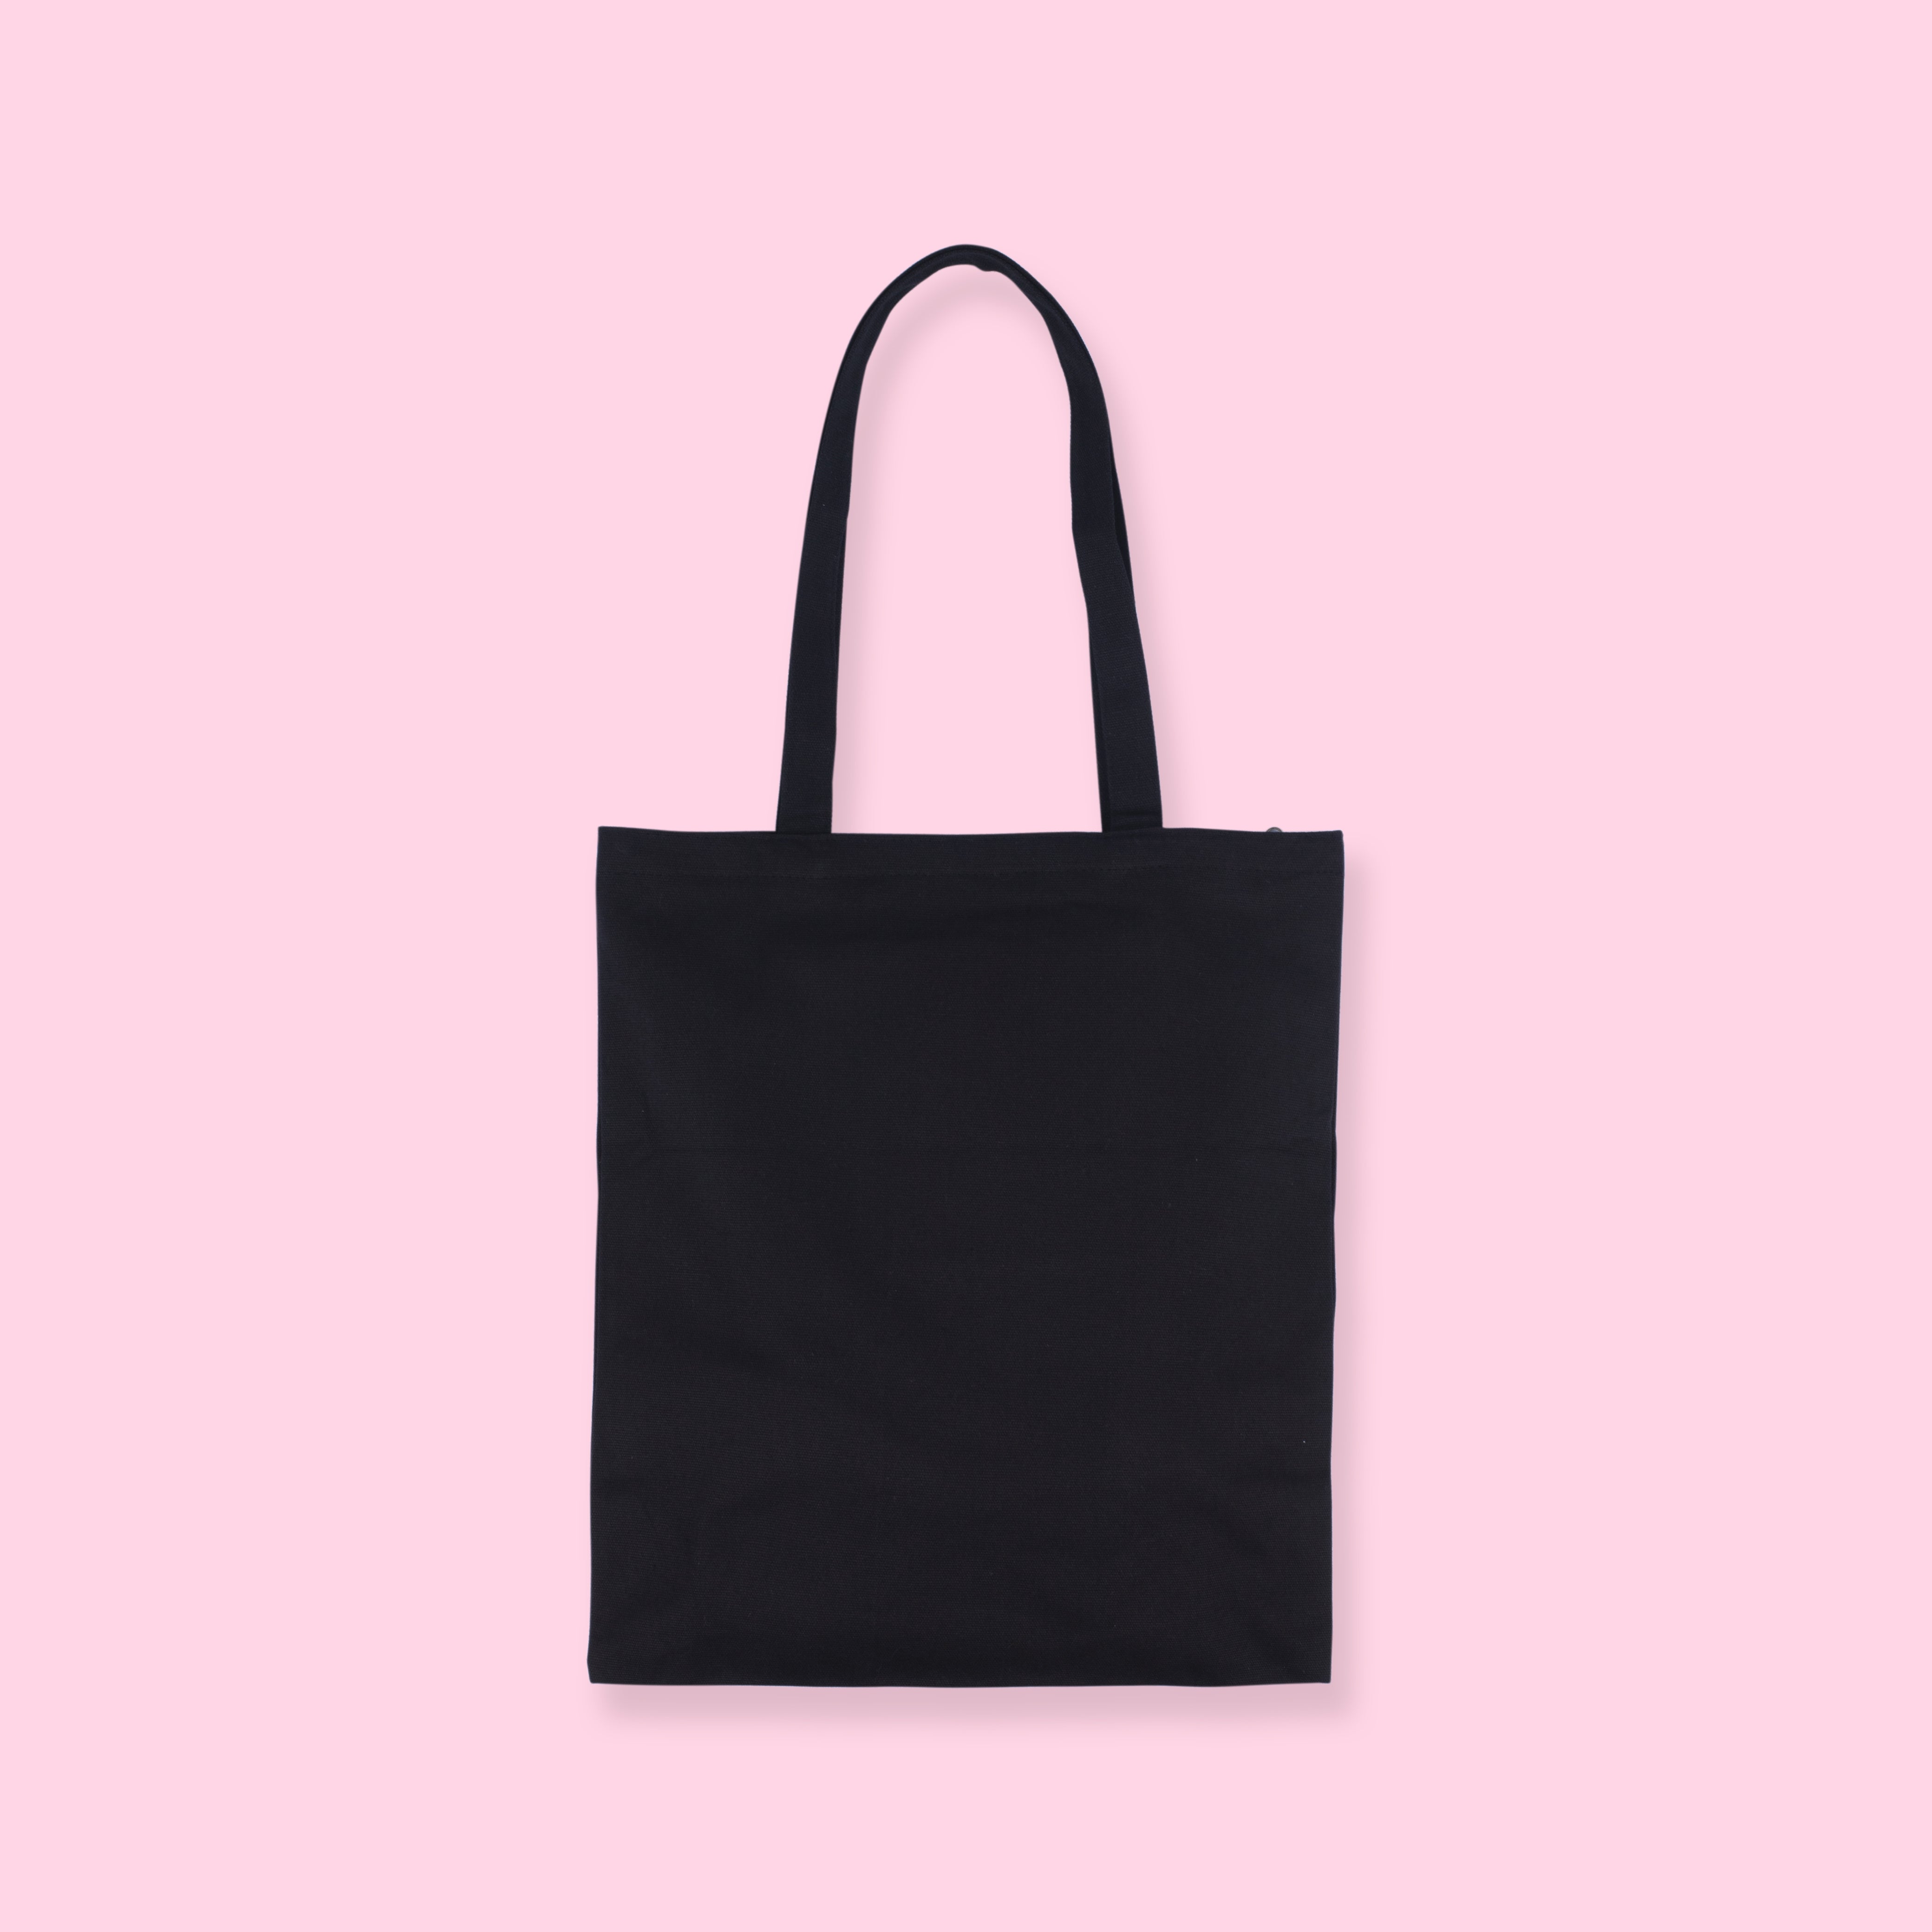 Cute Printed Stylish Tote Bag - Black - Stationery Pal